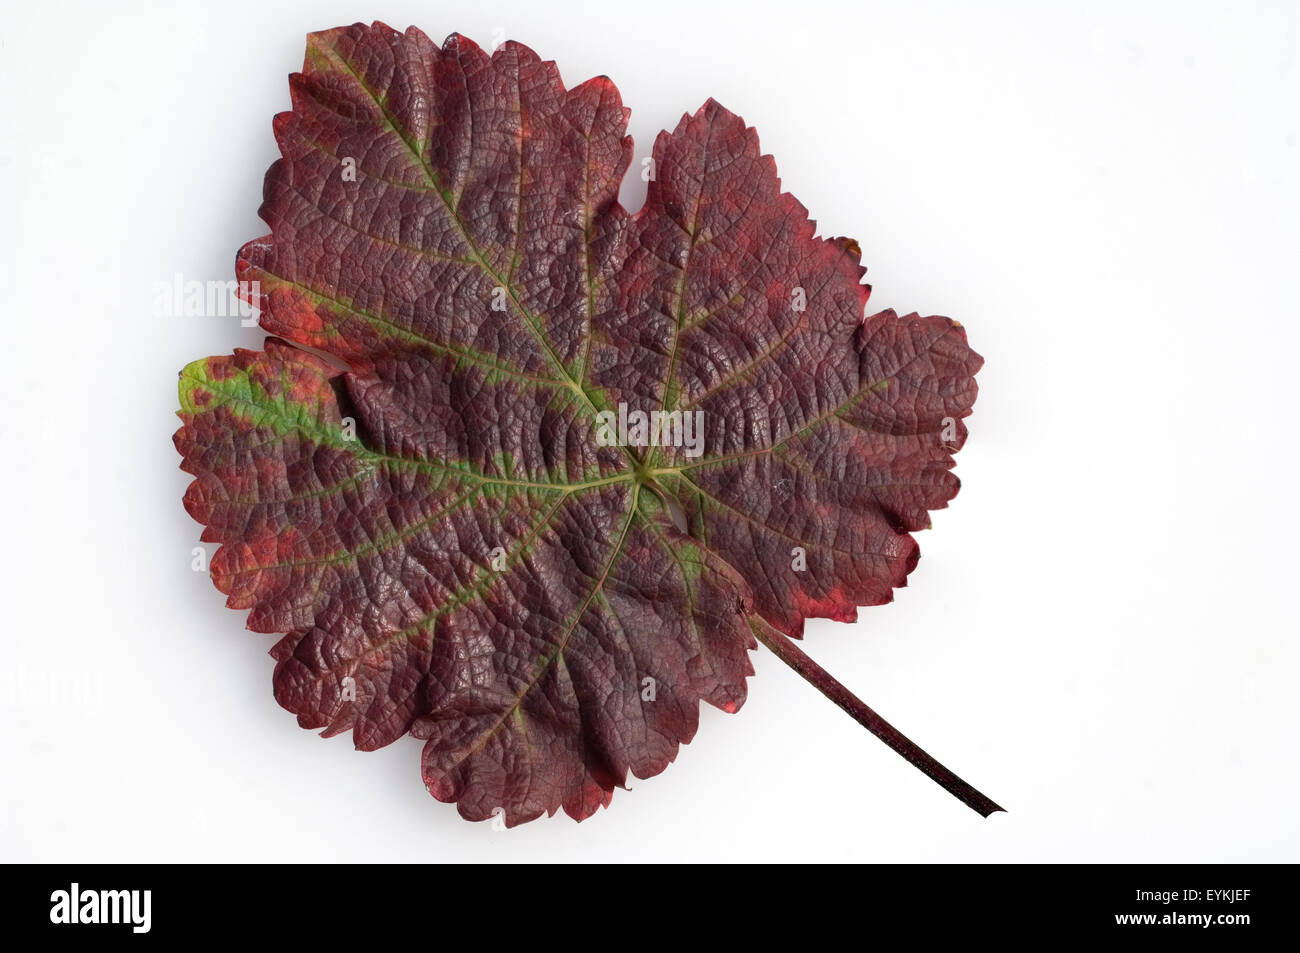 Weinblatt; Roter Wein, Herbst, Wein, Weinpflanzen, Reben, Fruechte, Beeren, Obst,  - Stock Photo